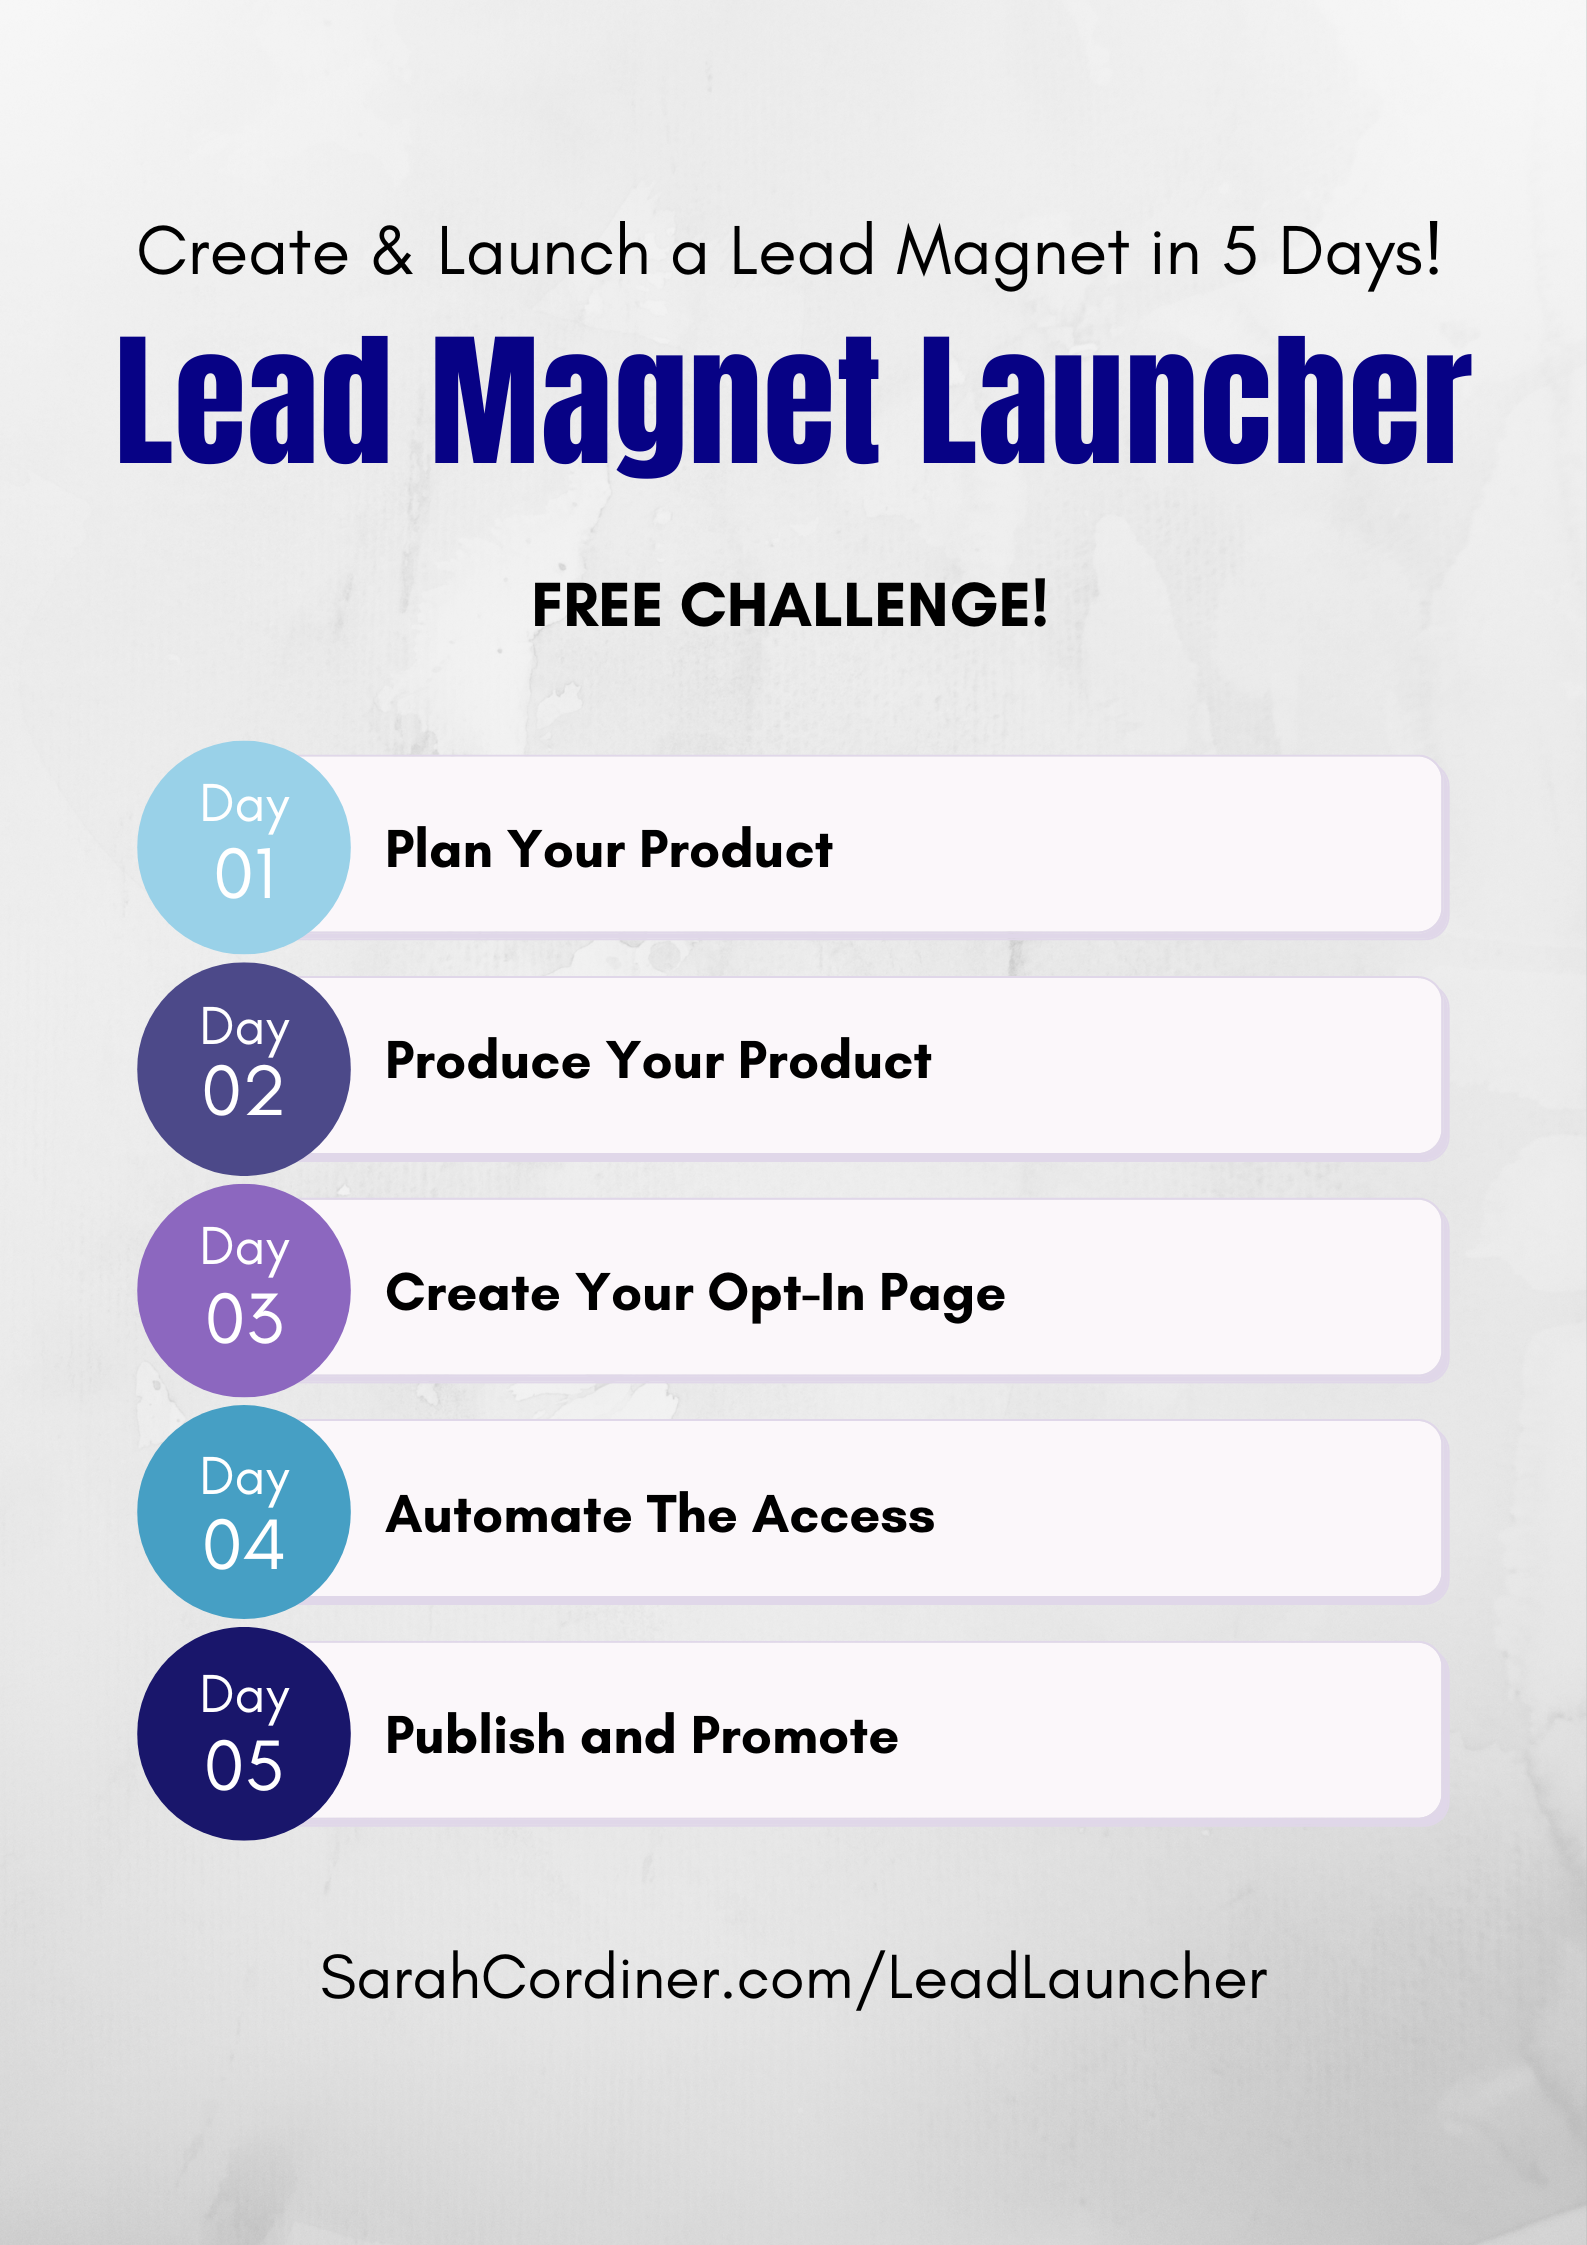 lead magnet launcher free challenege sarah cordiner